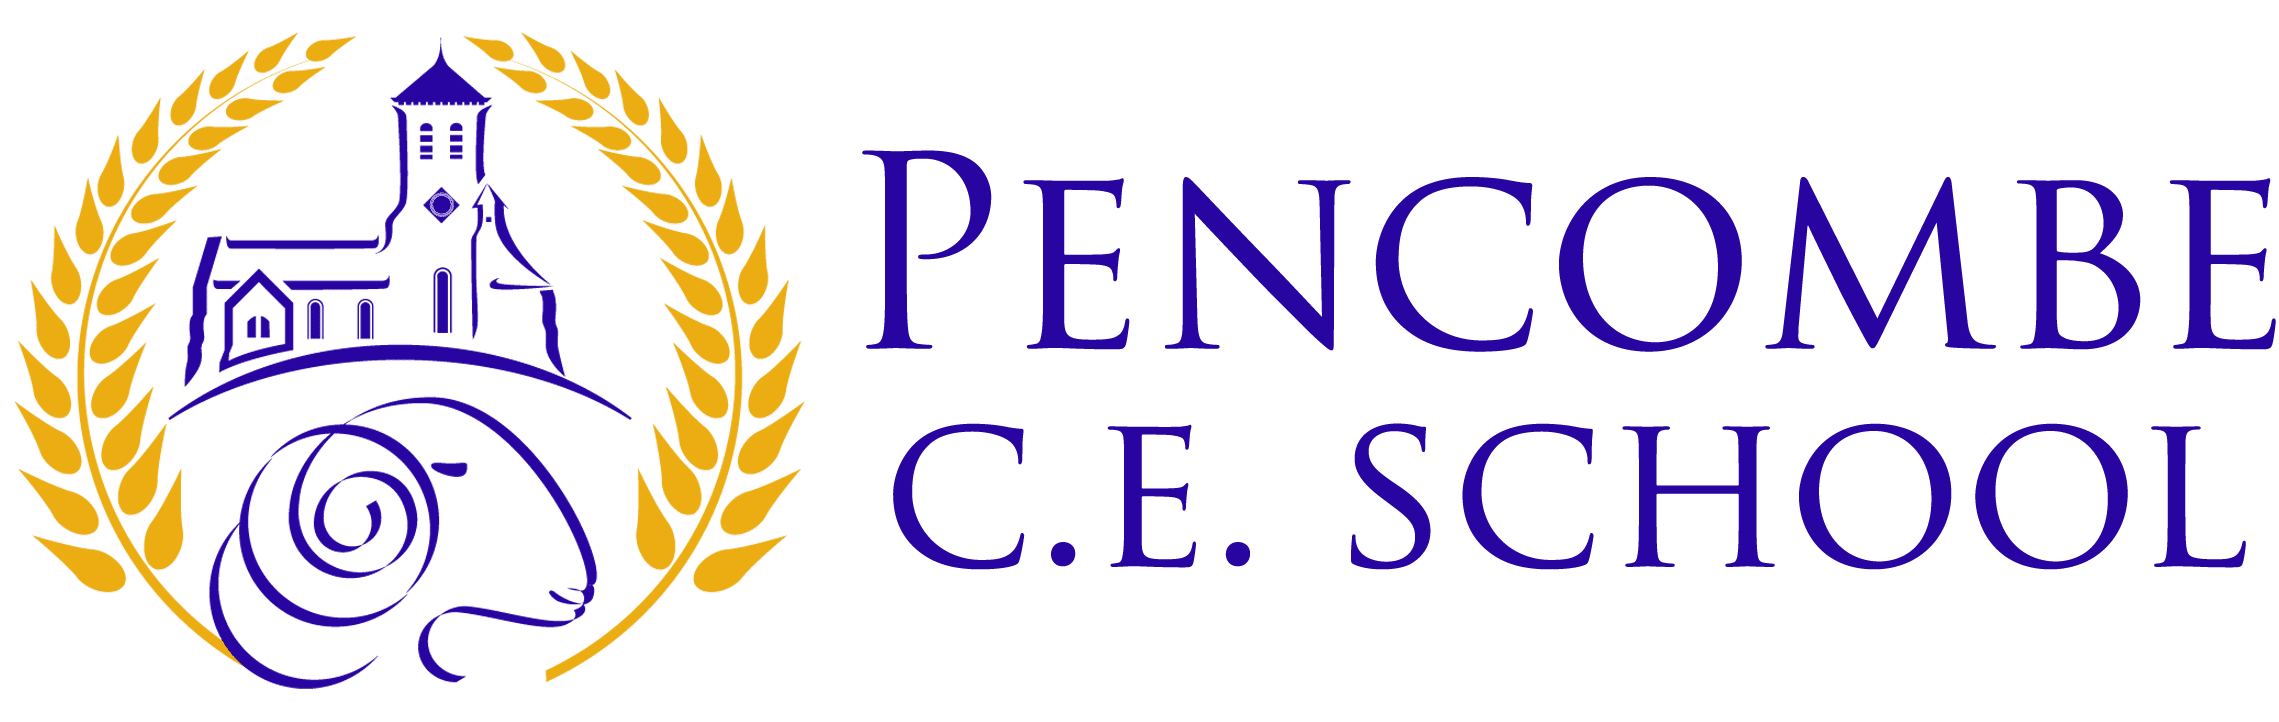 pencombe-logo.png